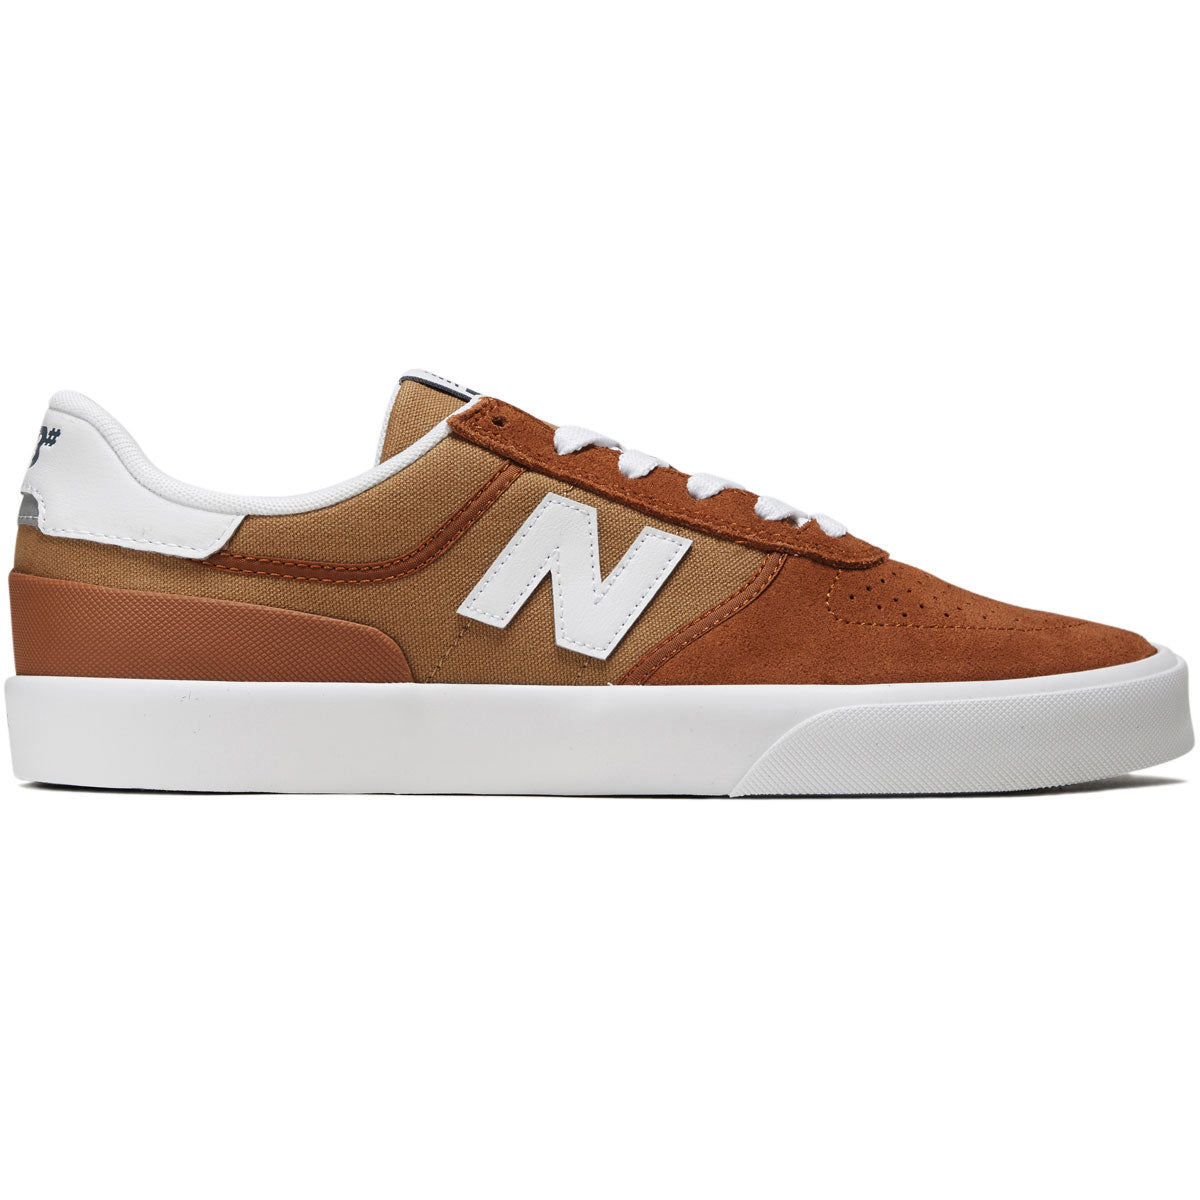 New Balance 272 Shoes - Rust/White image 1